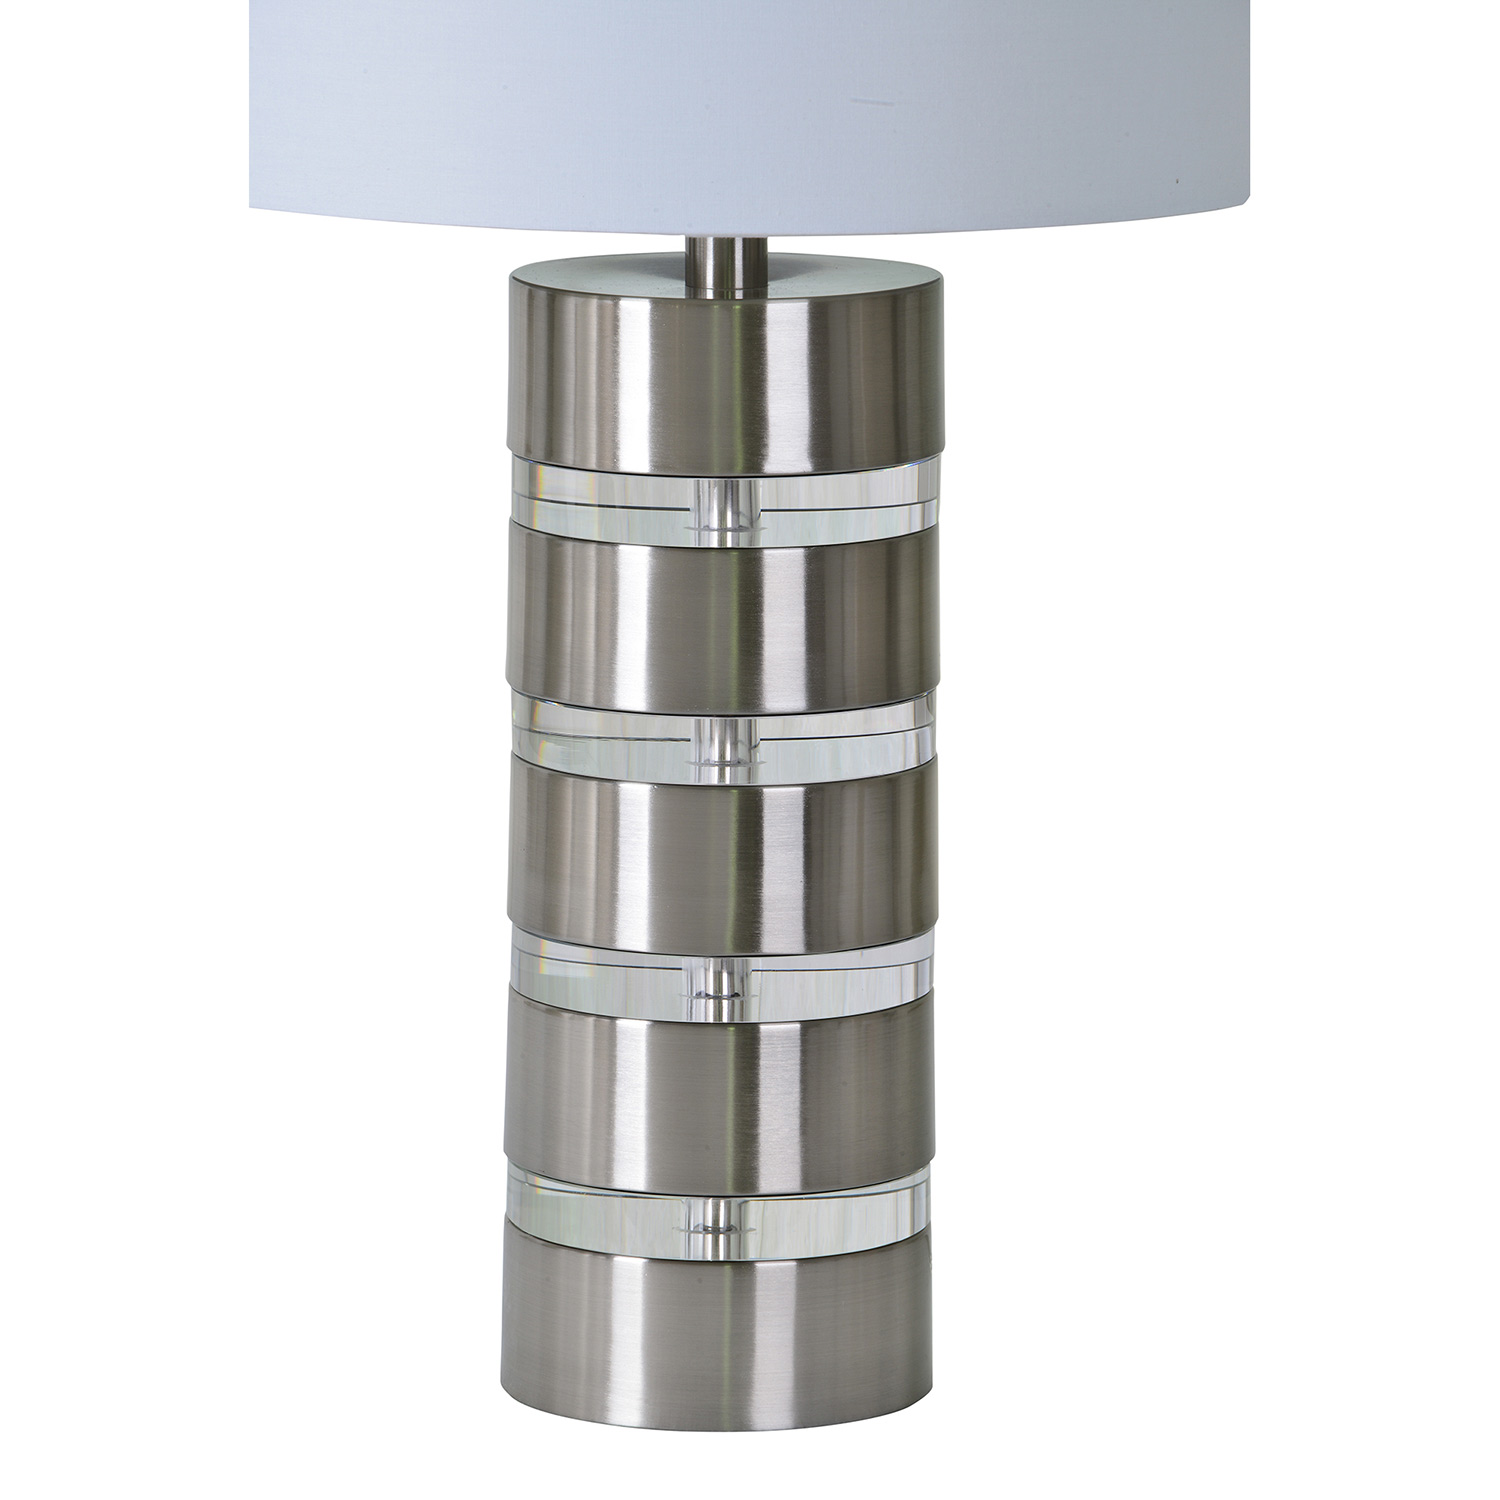 Ren-Wil Solomon Table Lamp - Brushed Nickel/Clear